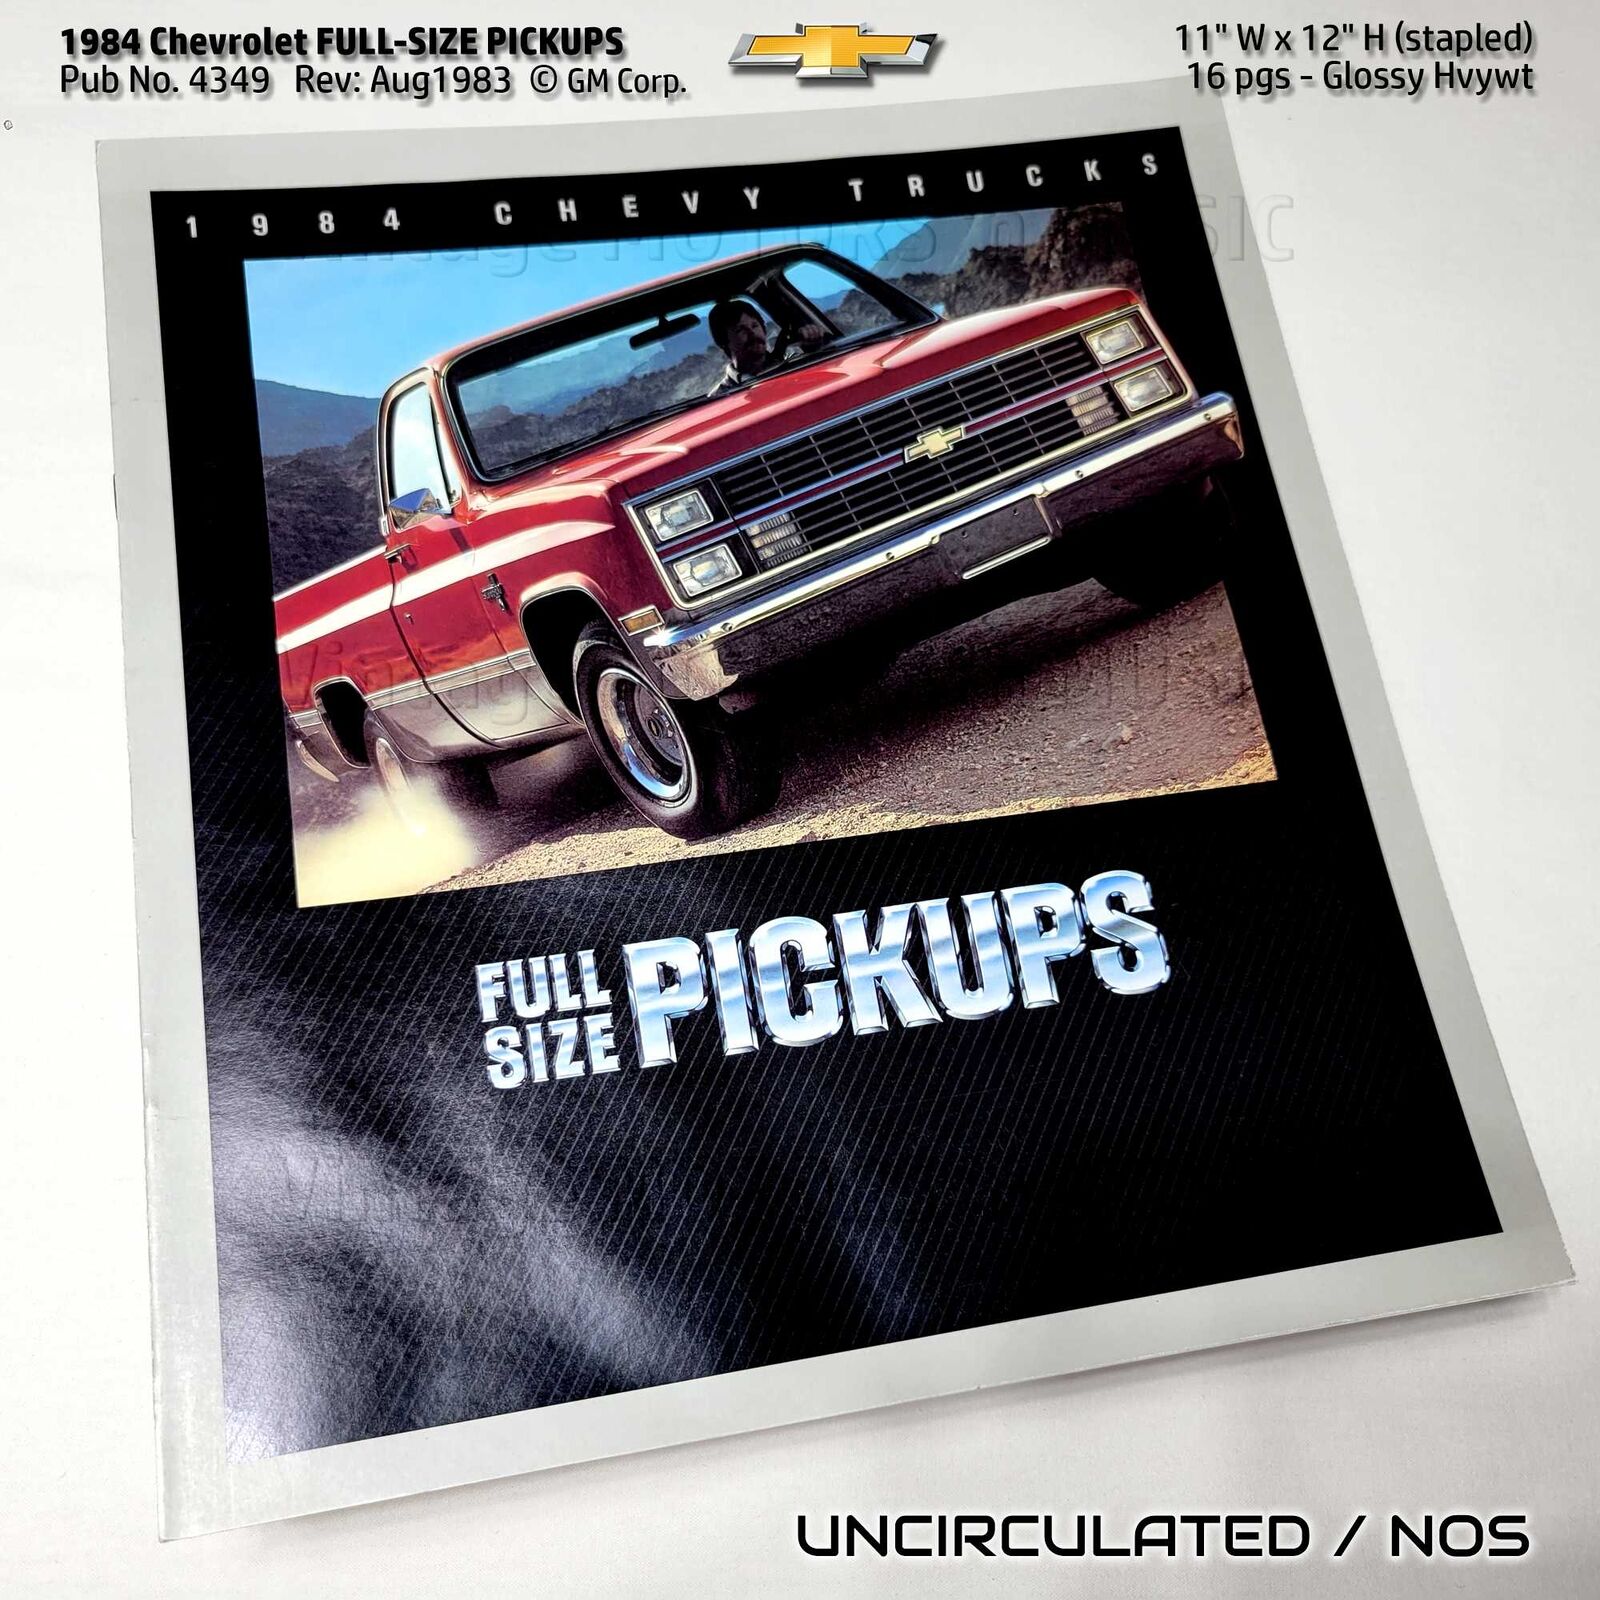 UNCIRCULATED 1984 Chevrolet Full-size Pickups 16 pg Brochure - #4349 Rev: 08-83